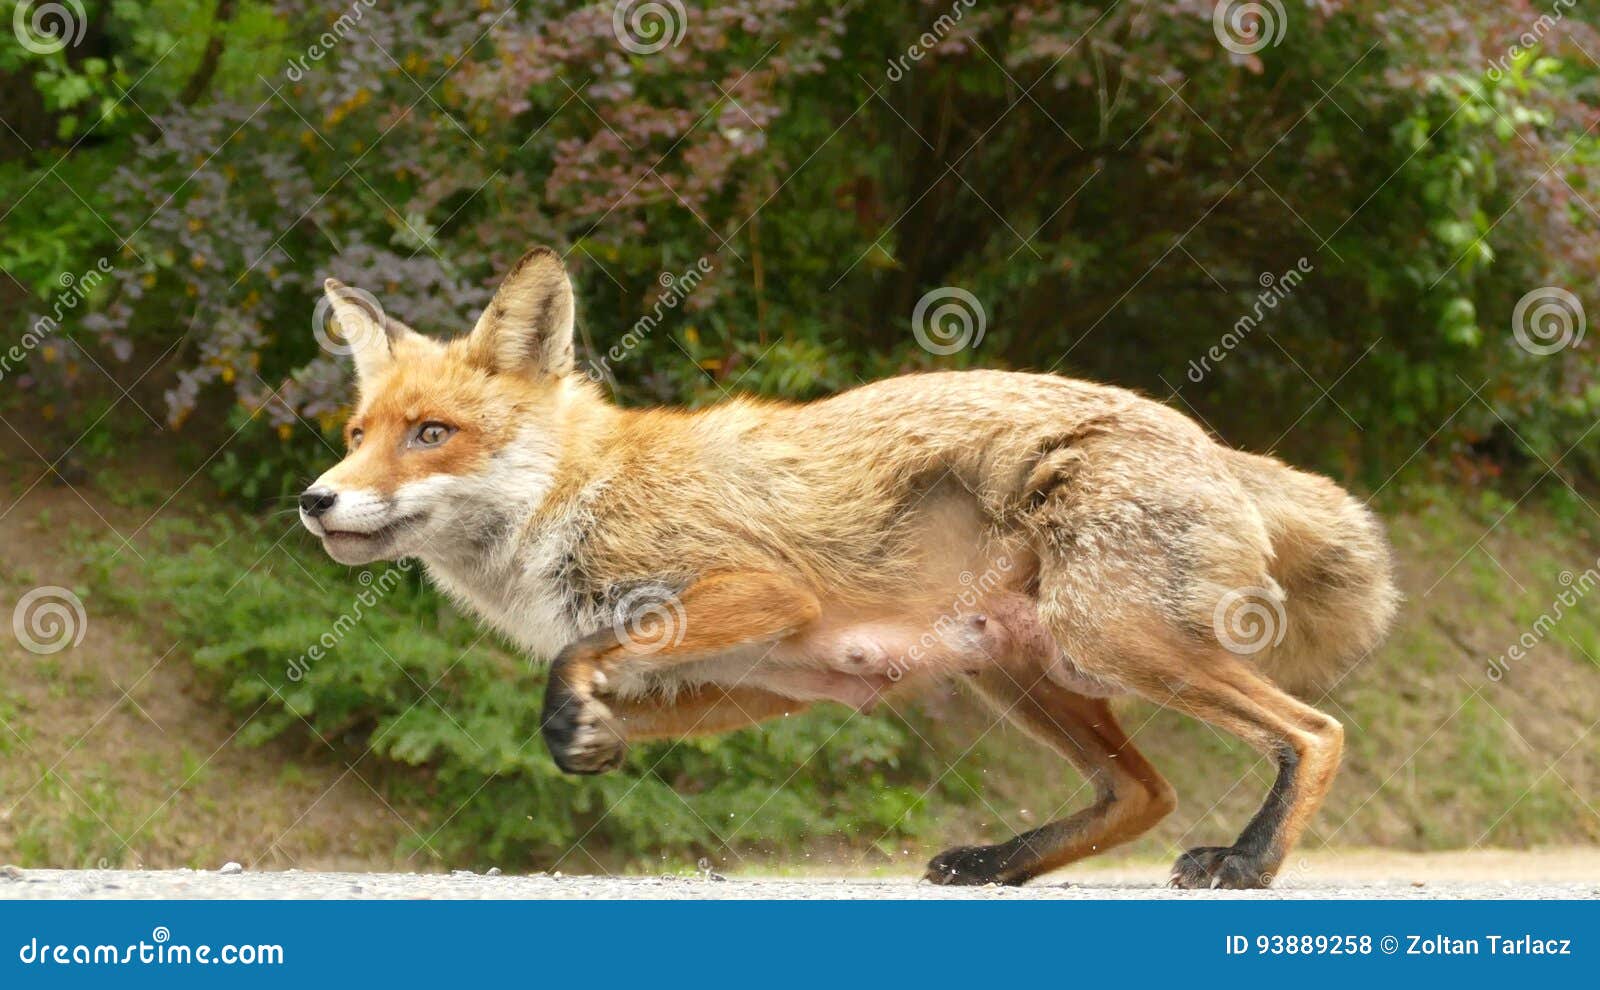 tame fox jumping